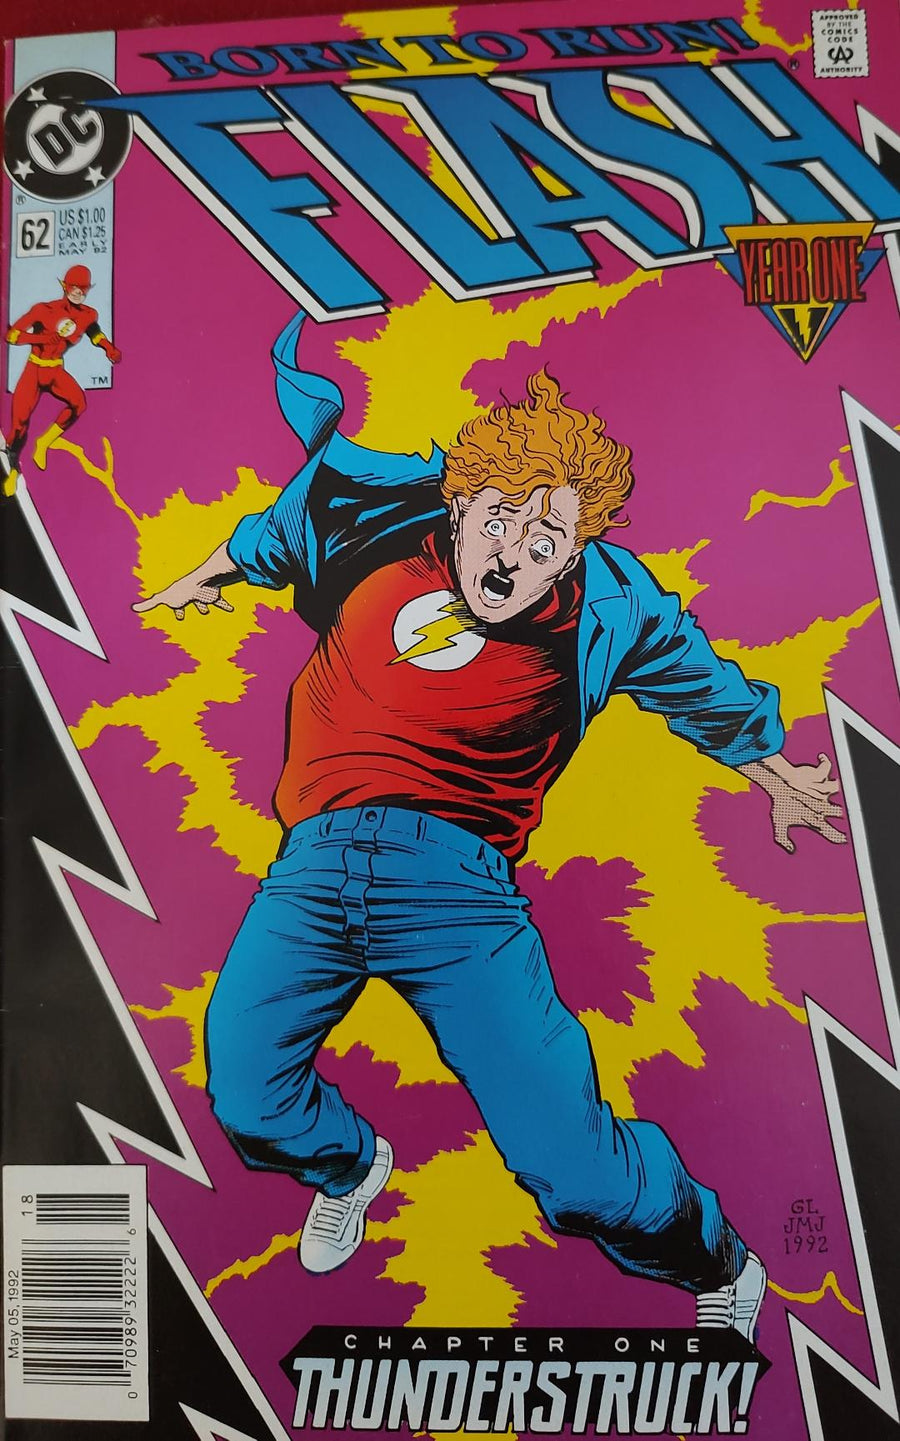 Flash #62 Vol 2 1992 Comic Book Cover